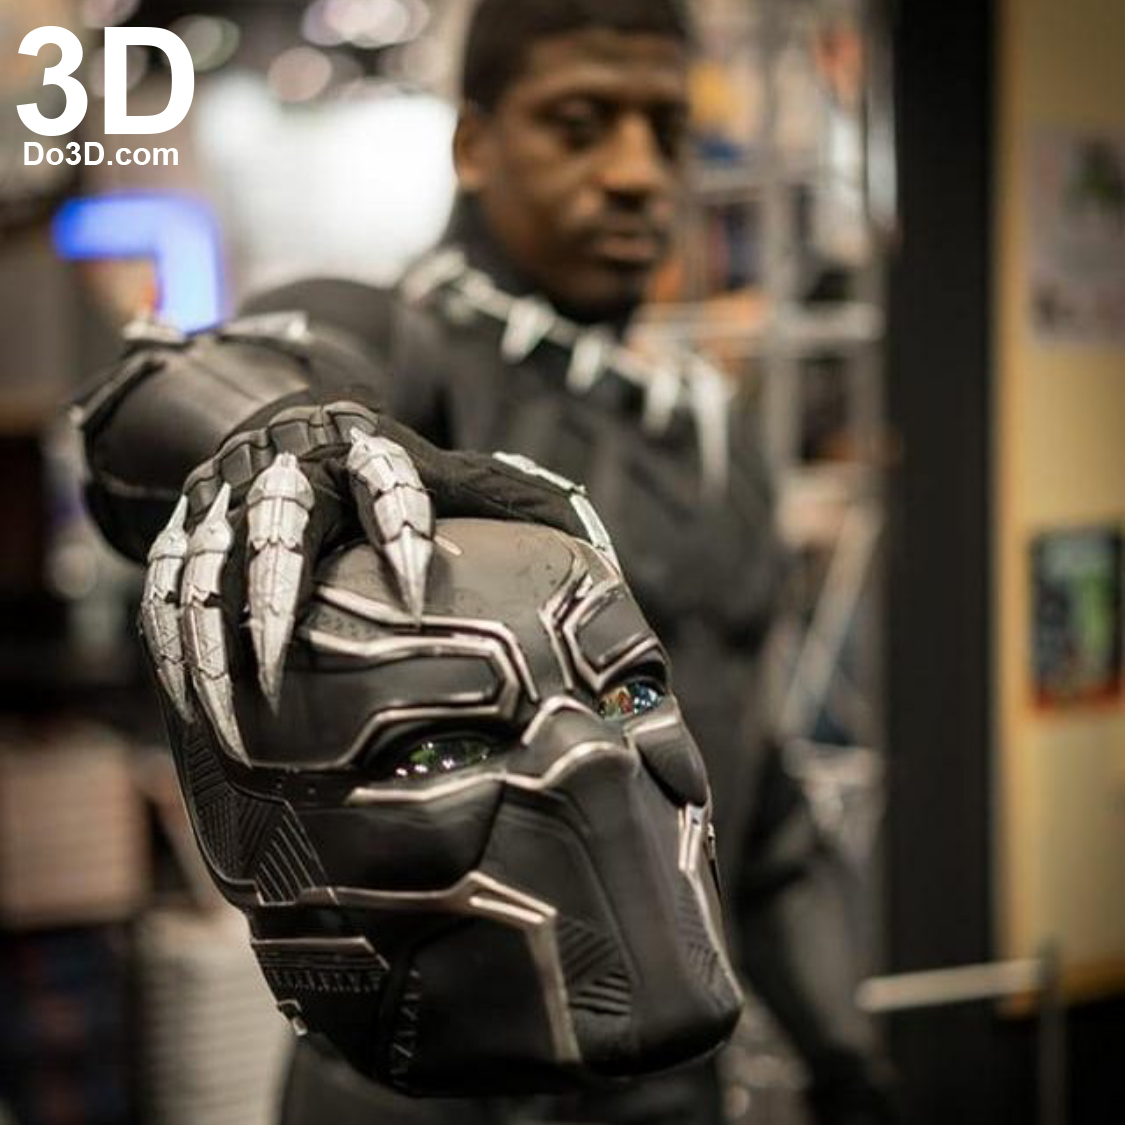 3D Printable Model: Black Panther Civil War Full Body Suit / Armor